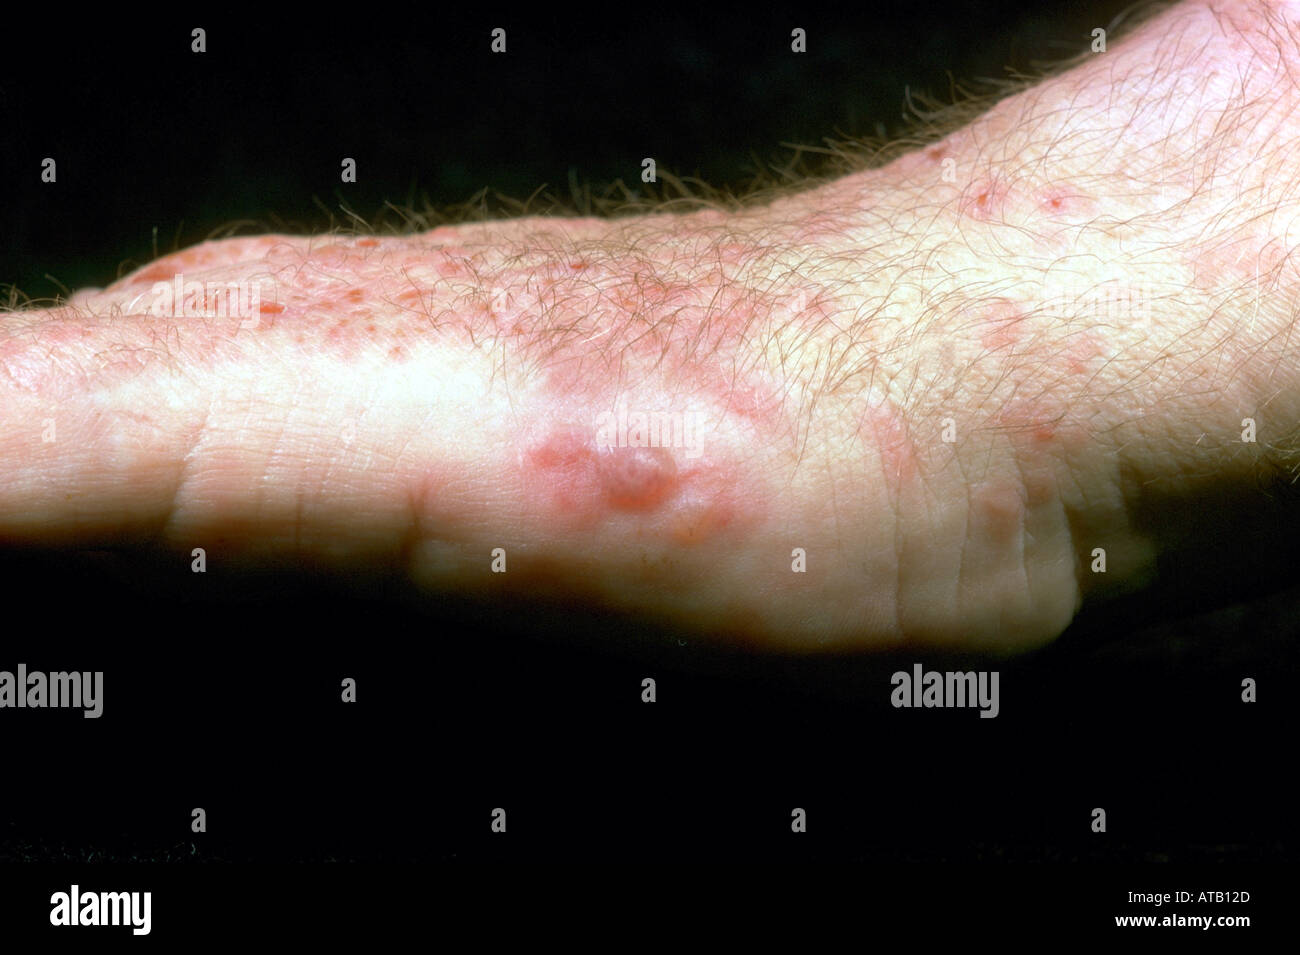 Dermatitis herpetiformis Stock Photo